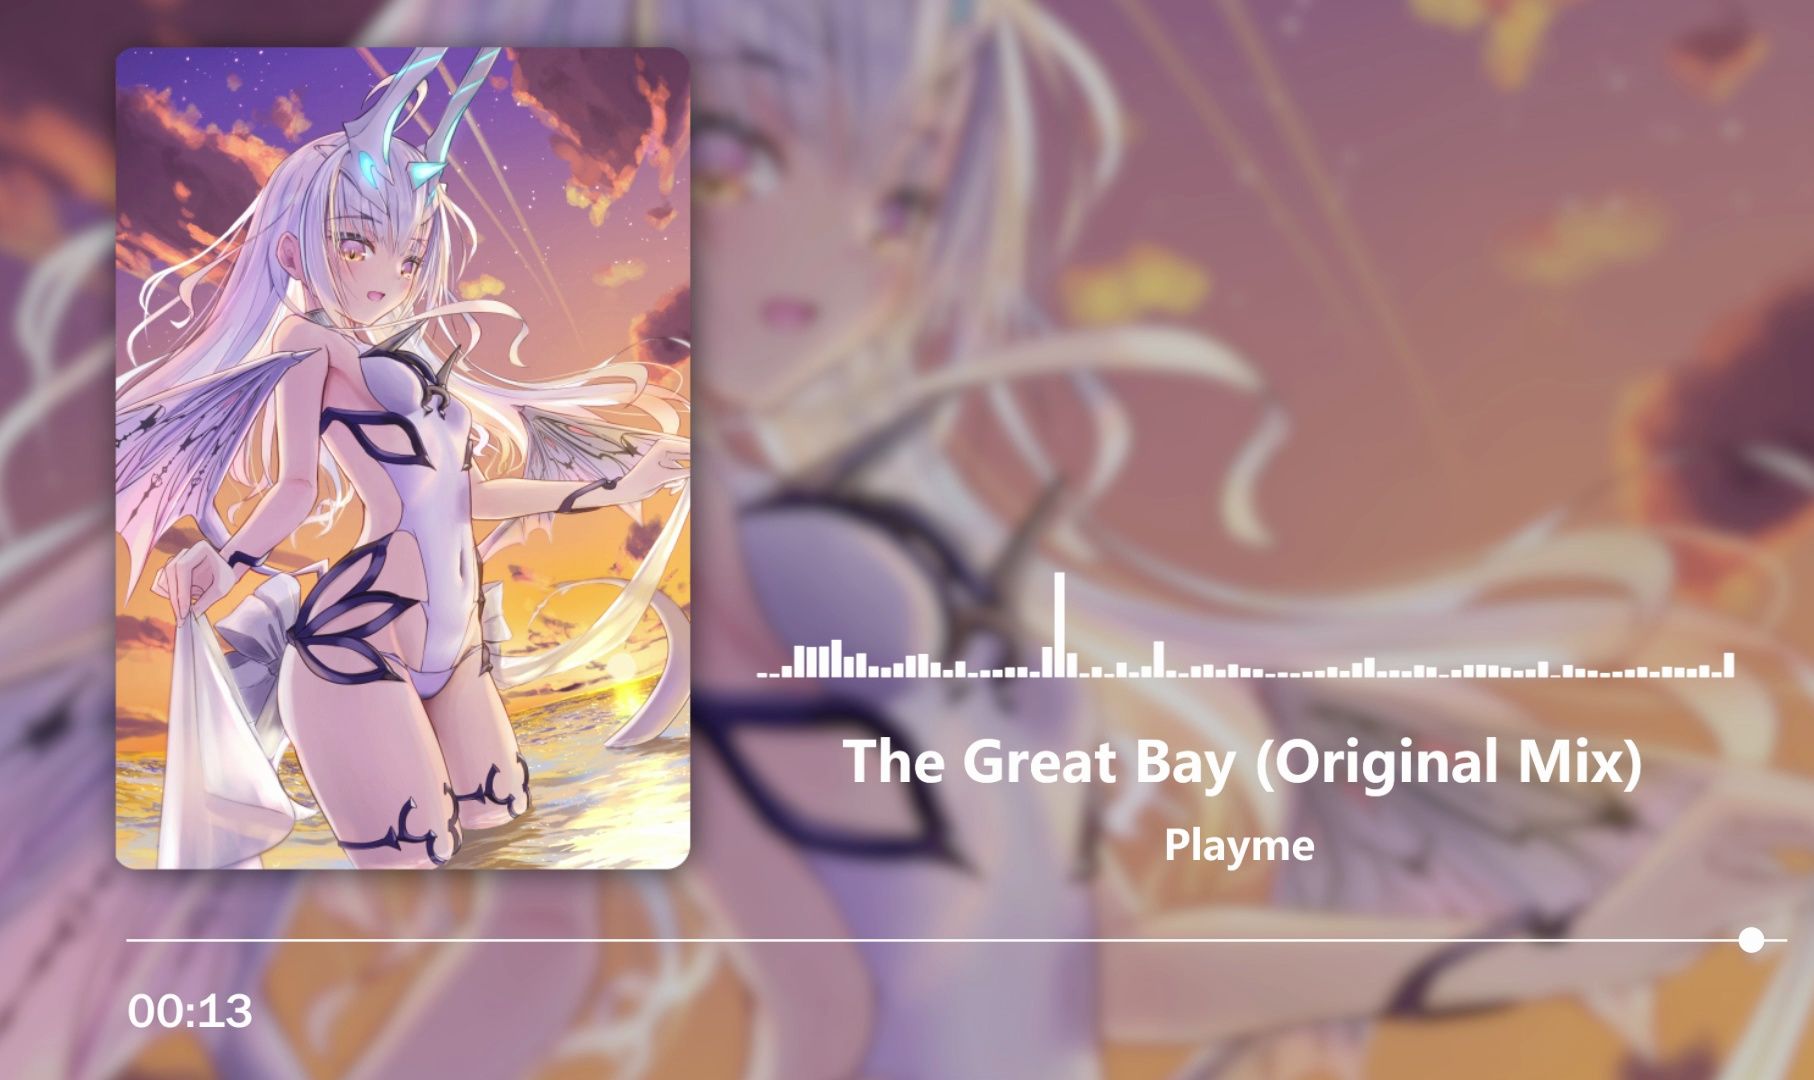 【Uplifting Trance】Playme - The Great Bay (Original Mix)